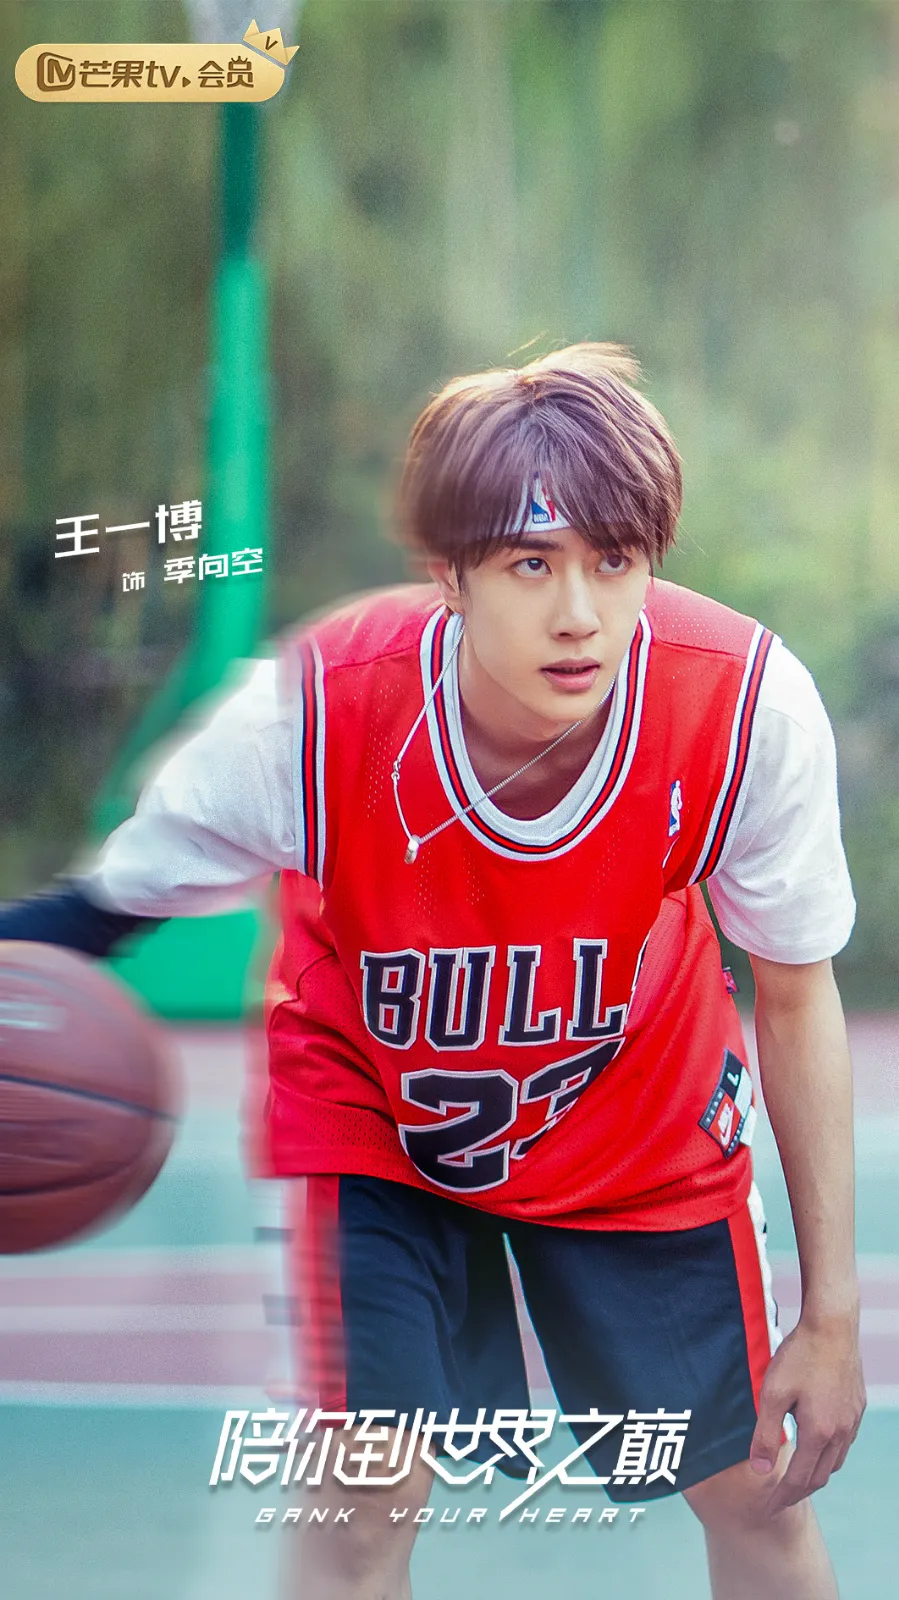  Wang Yibo 篮球运动少年元气热血.jpg